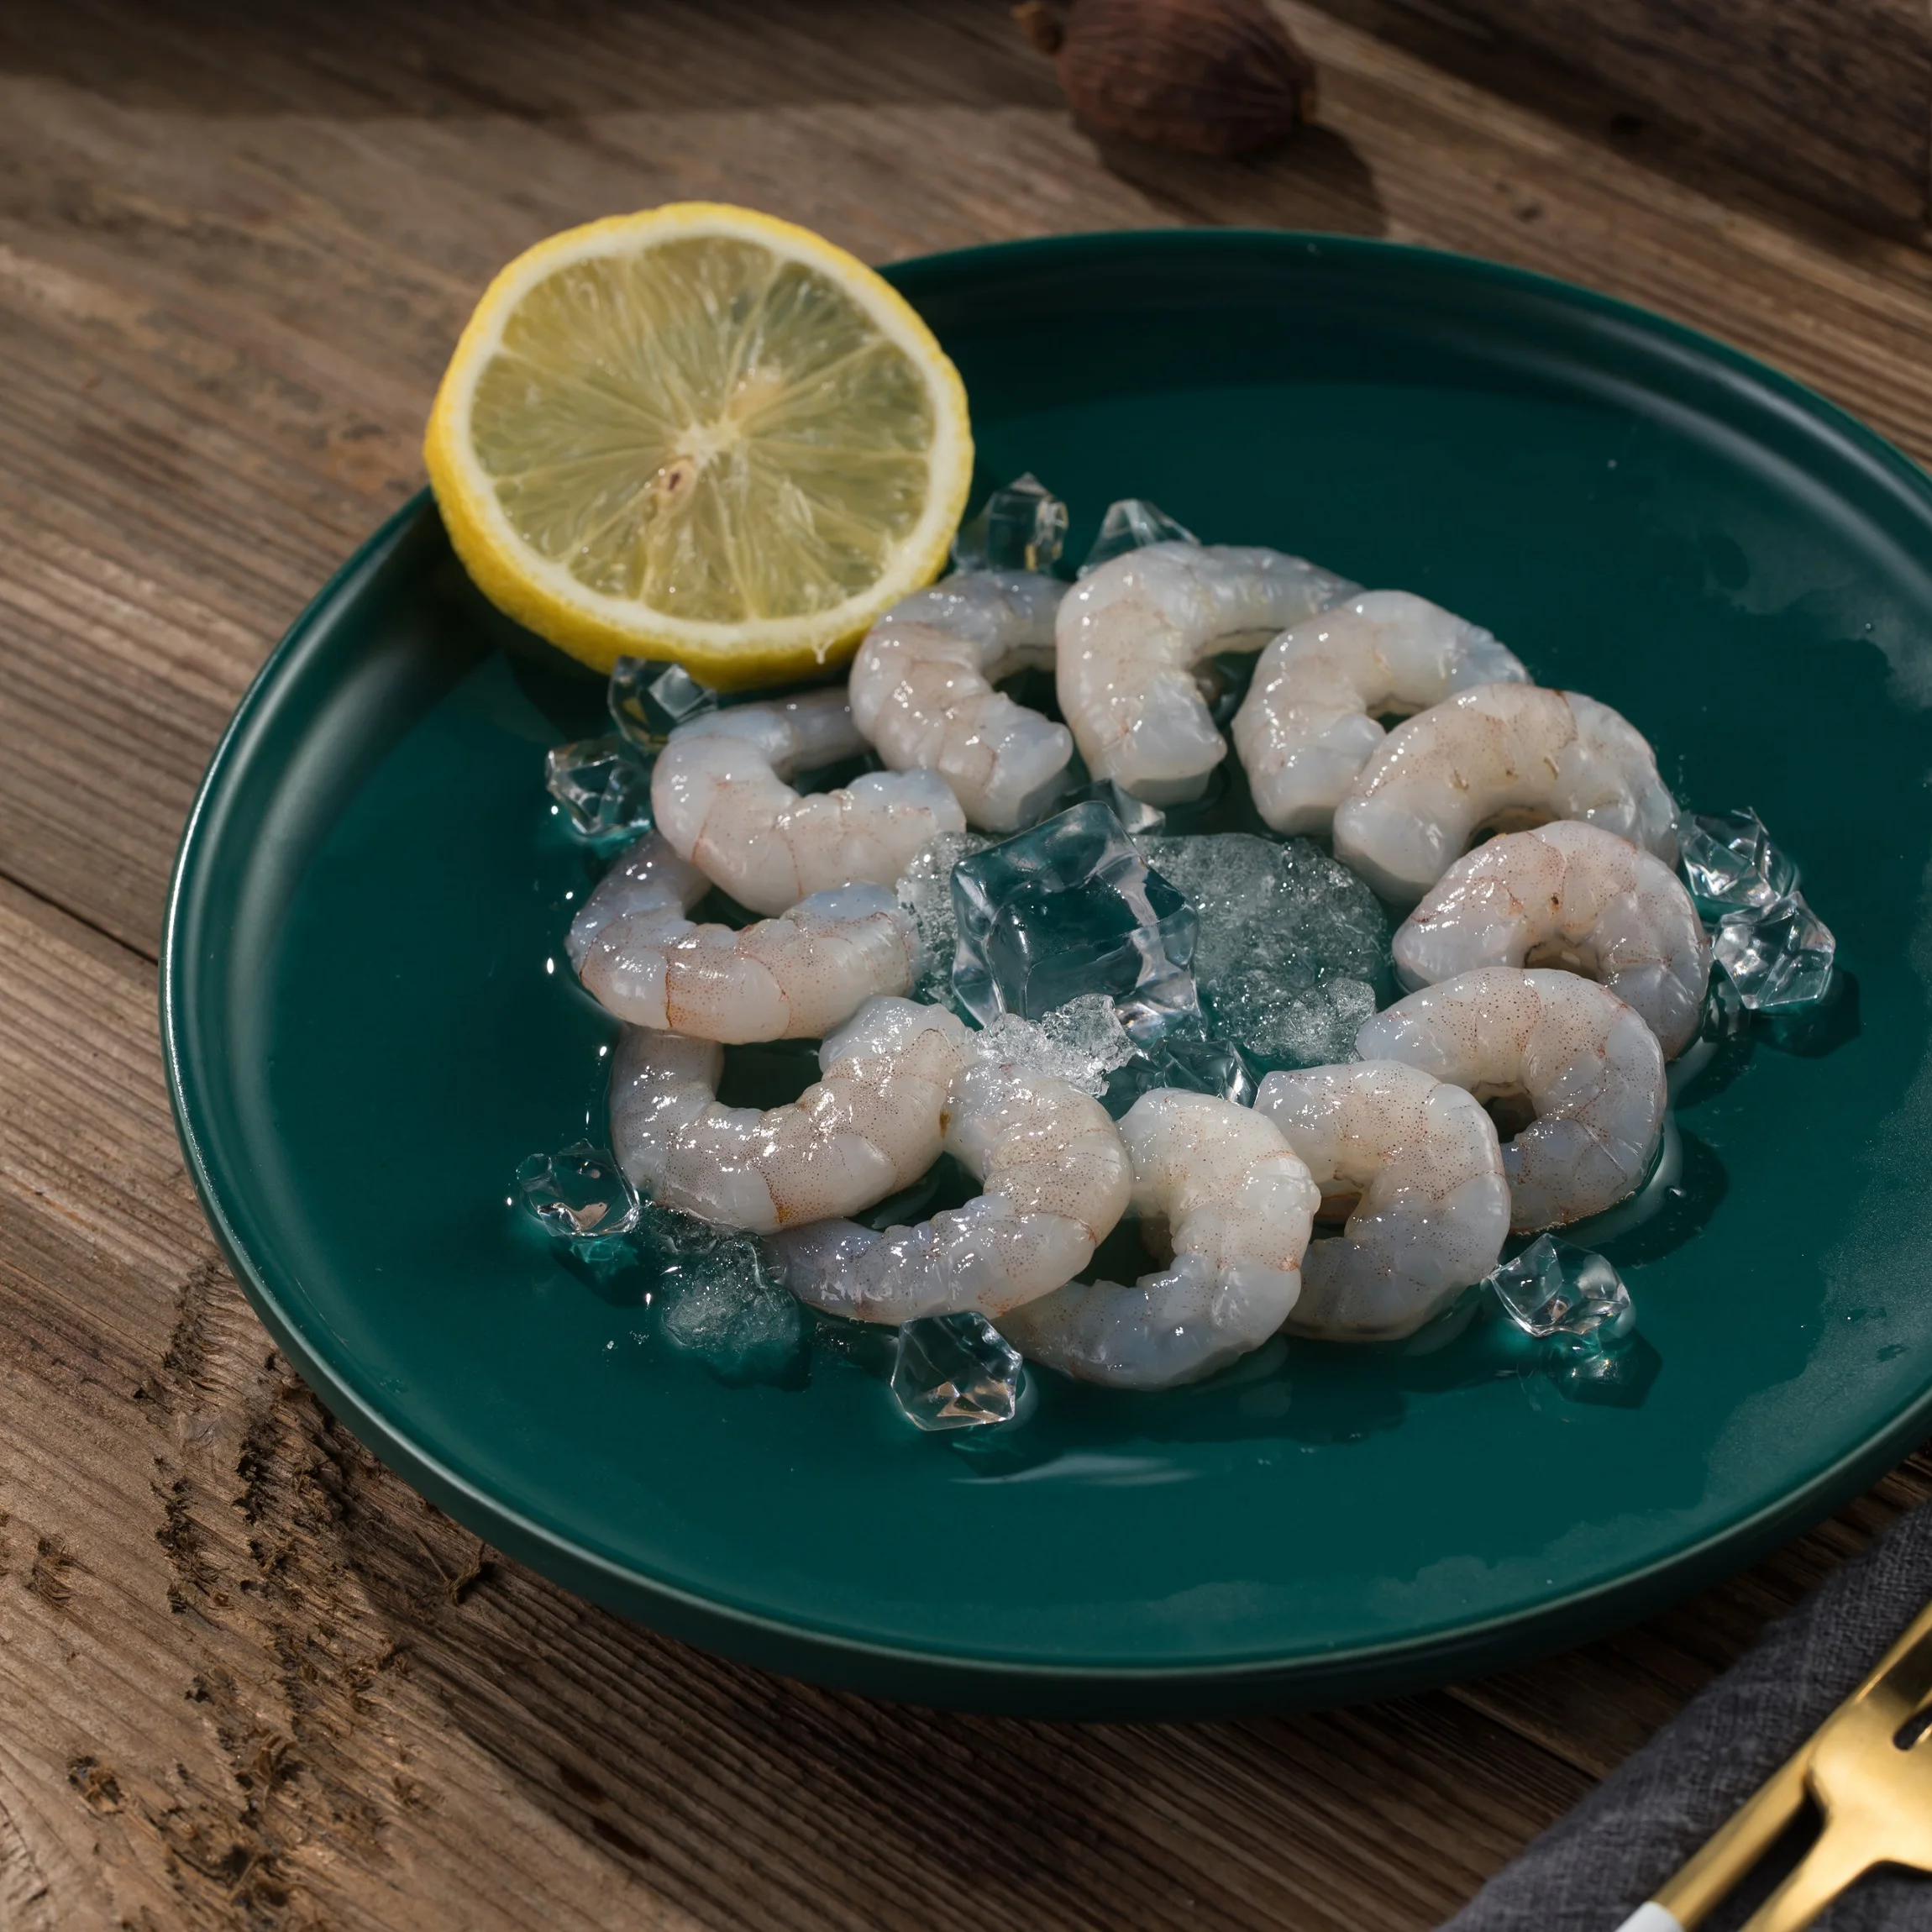 shrimp和prawn区别照片图片